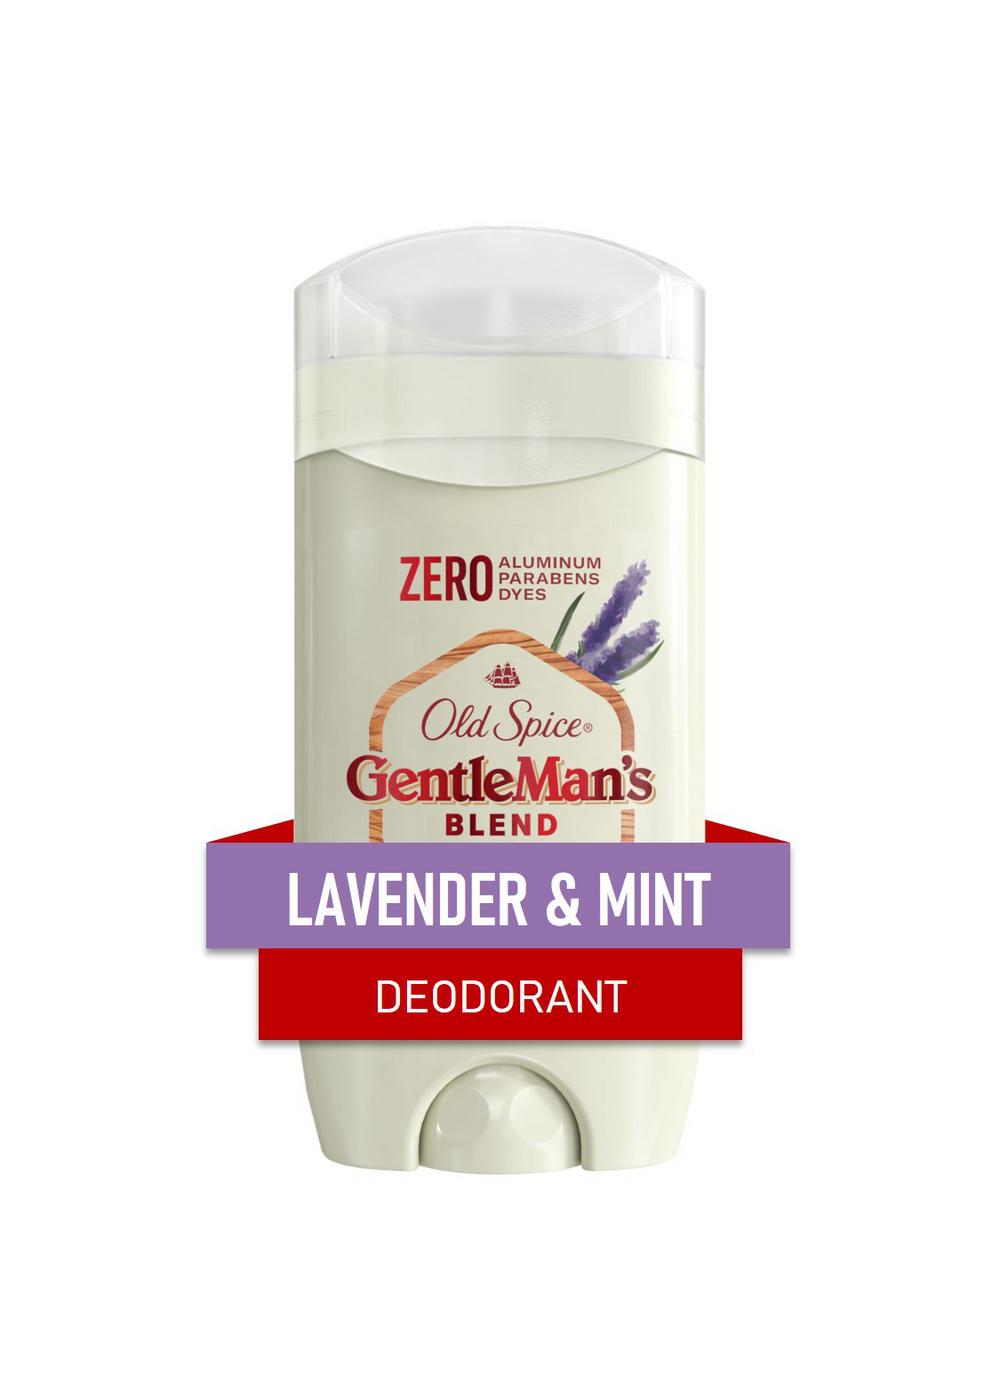 Old Spice Gentleman's Blend Deodorant - Lavender & Mint; image 8 of 9